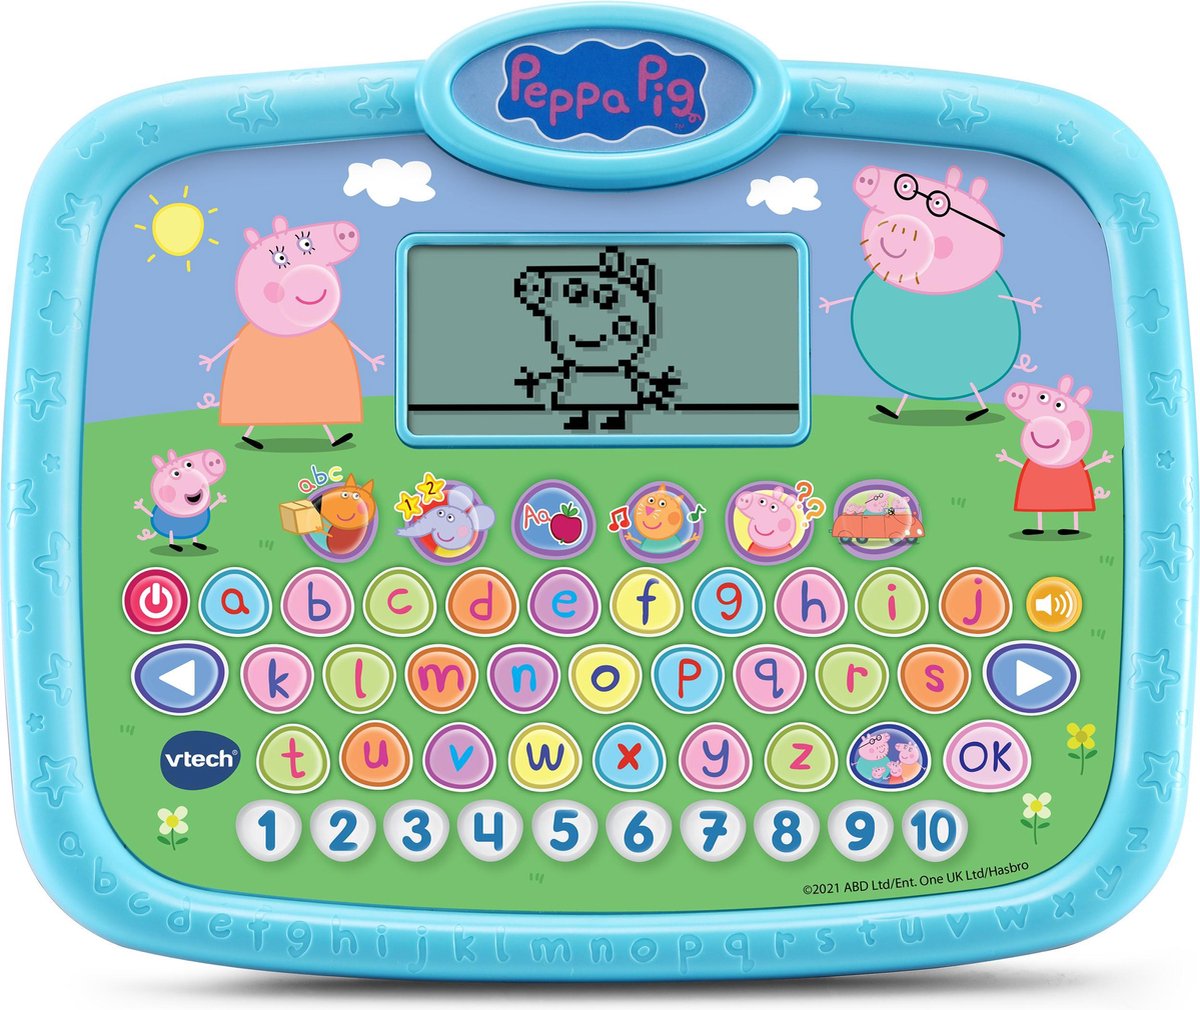 VTech Peppa Pig Tablet - Kinder Leercomputer - Educatief Speelgoed